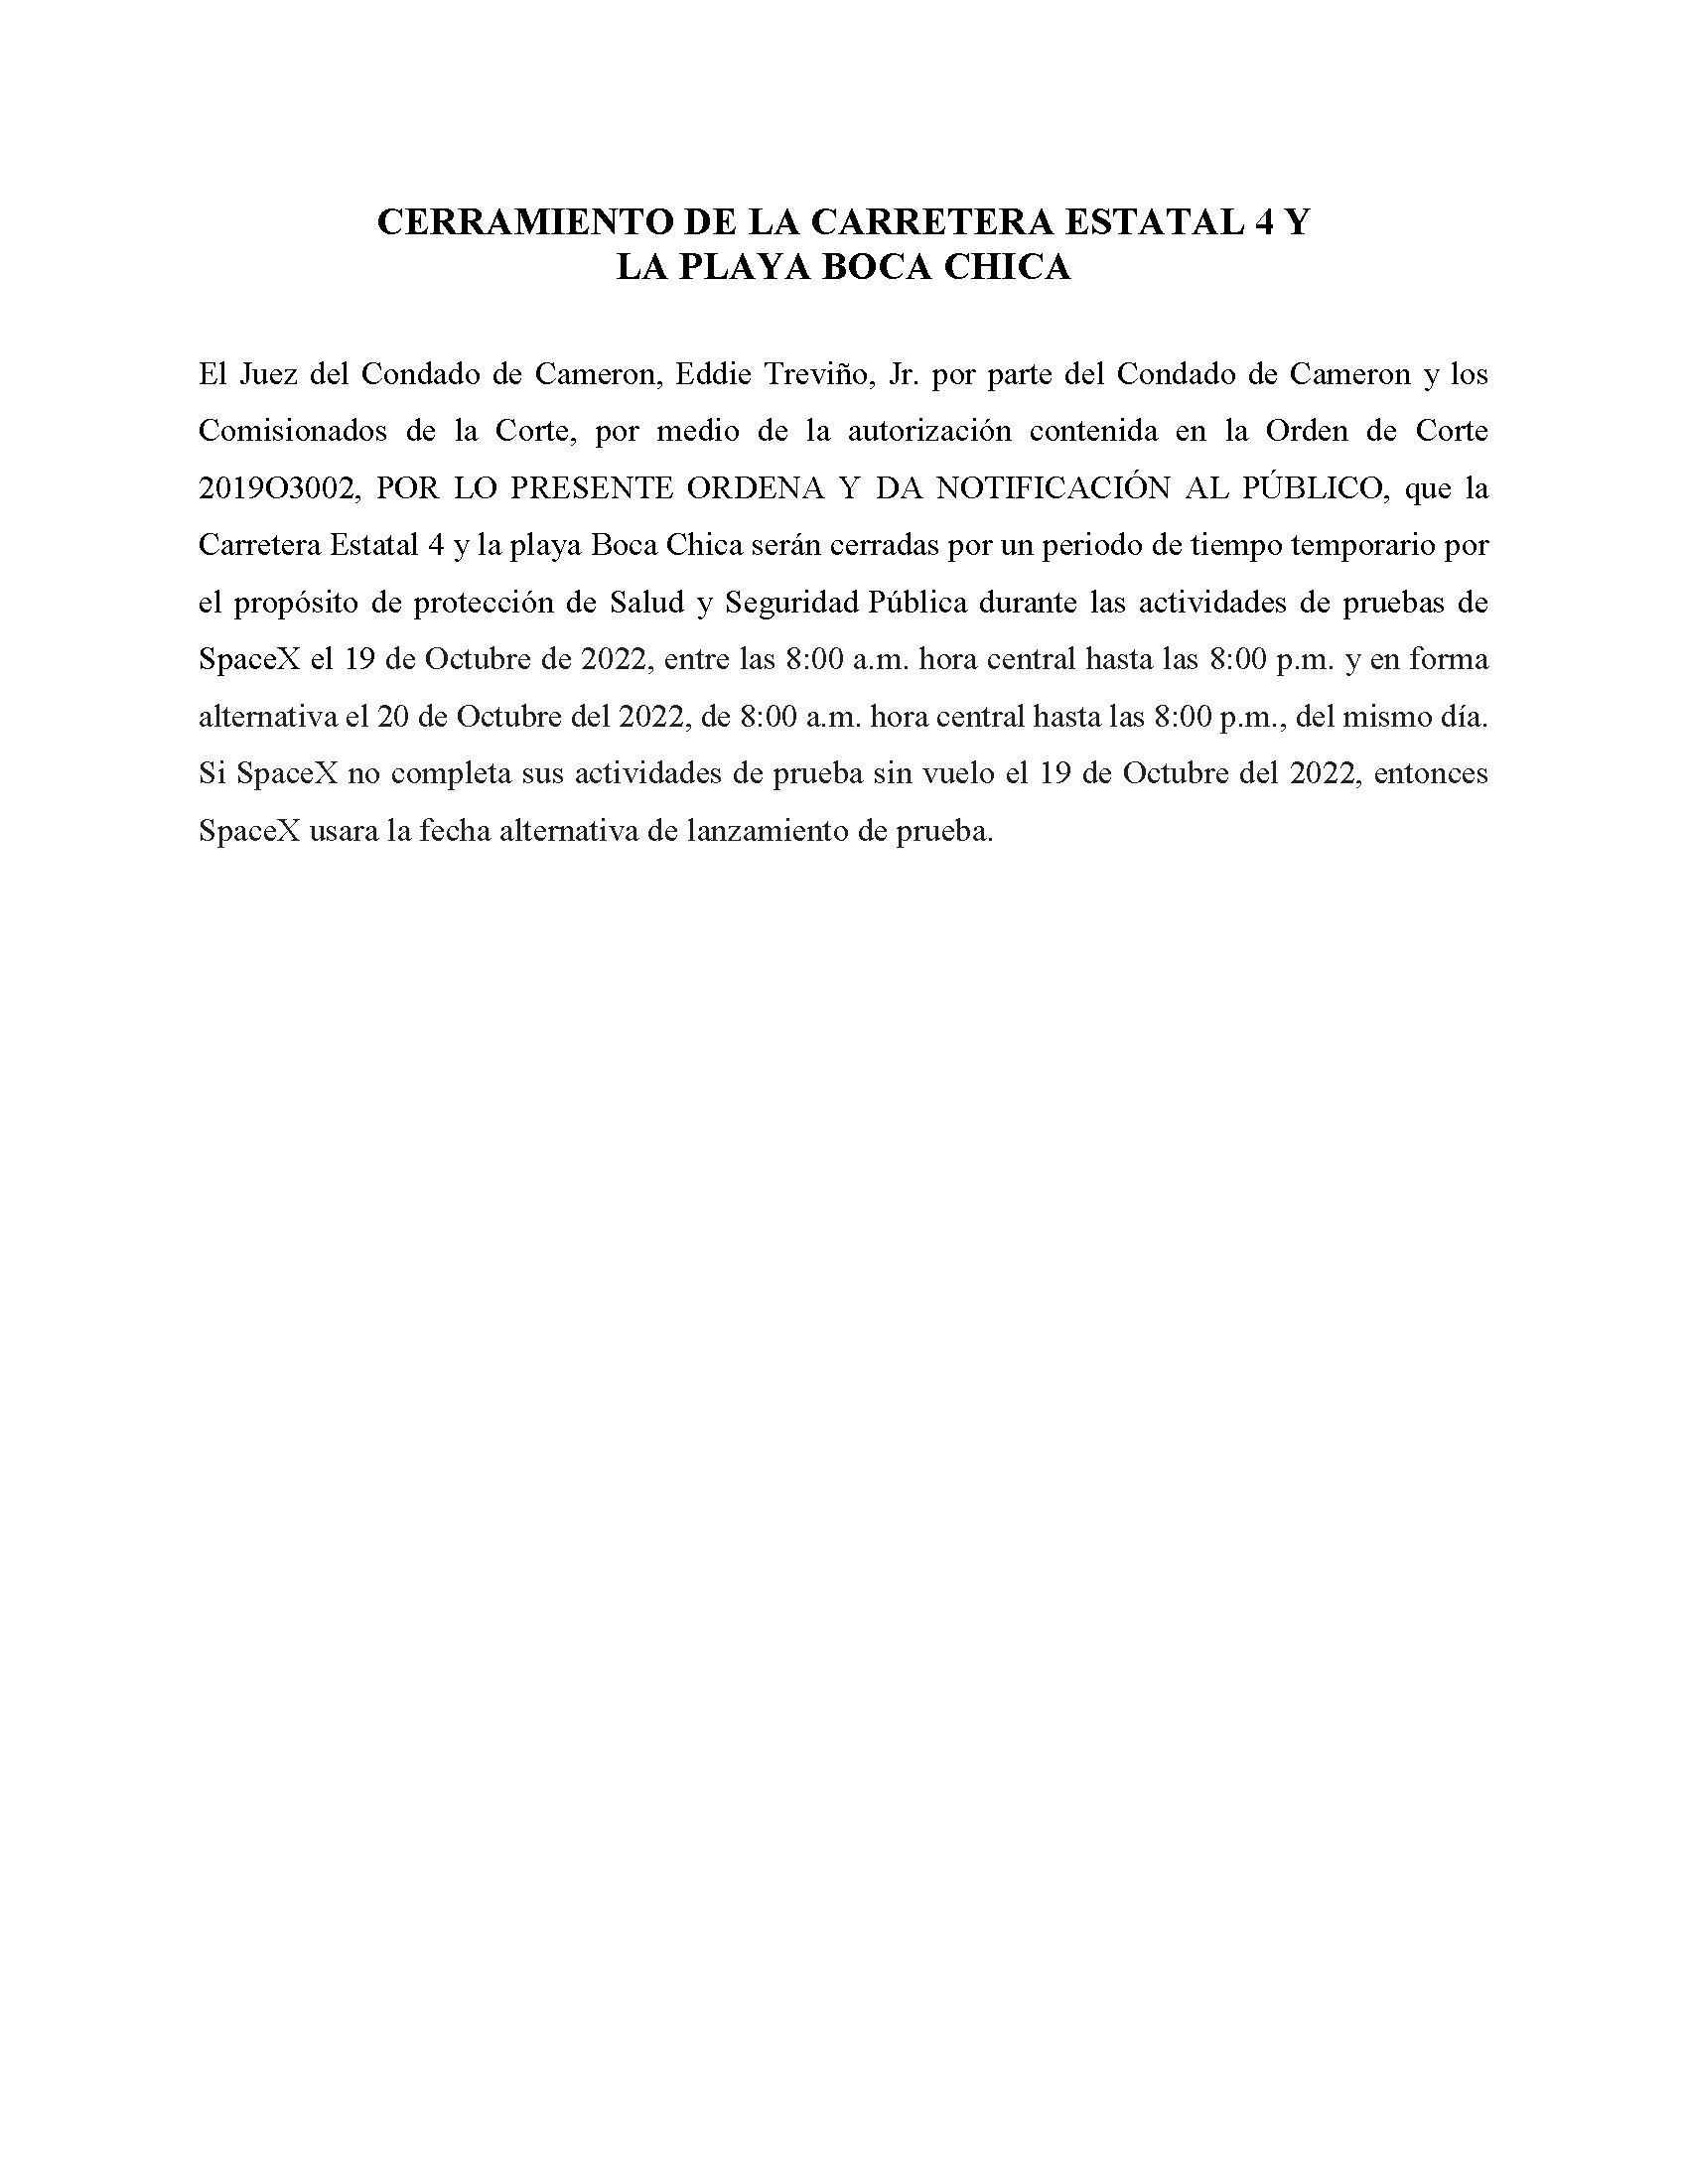 ORDER.CLOSURE OF HIGHWAY 4 Y LA PLAYA BOCA CHICA.SPANISH.10.19.2022